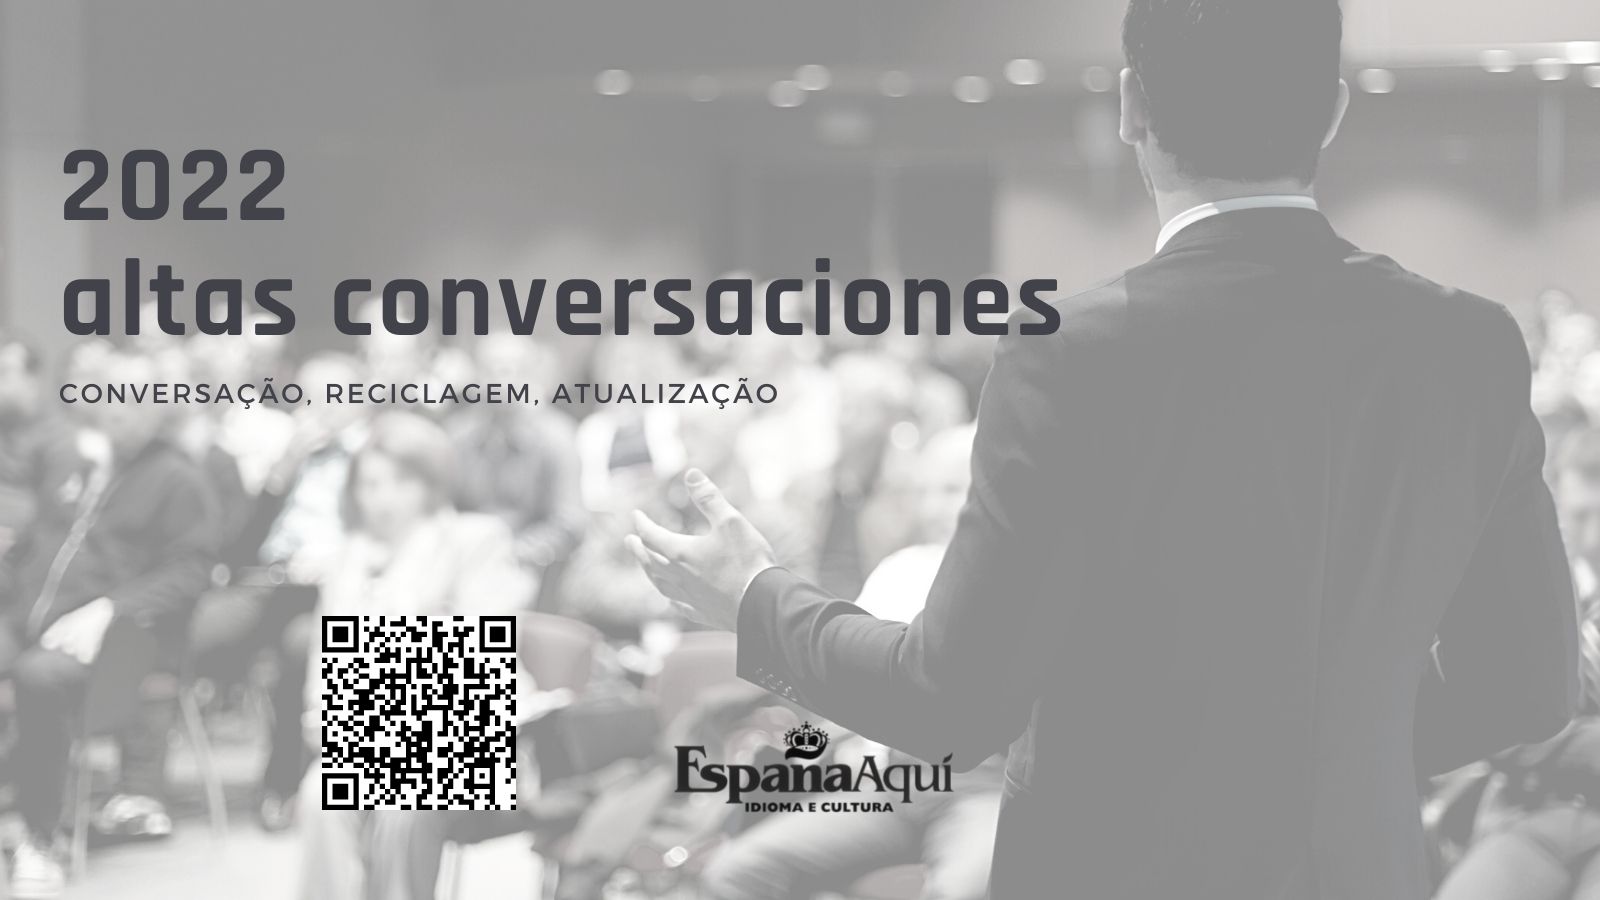 https://www.espanaaqui.com.br/pdf/dezembro%202021/altas%20conversaciones.jpg